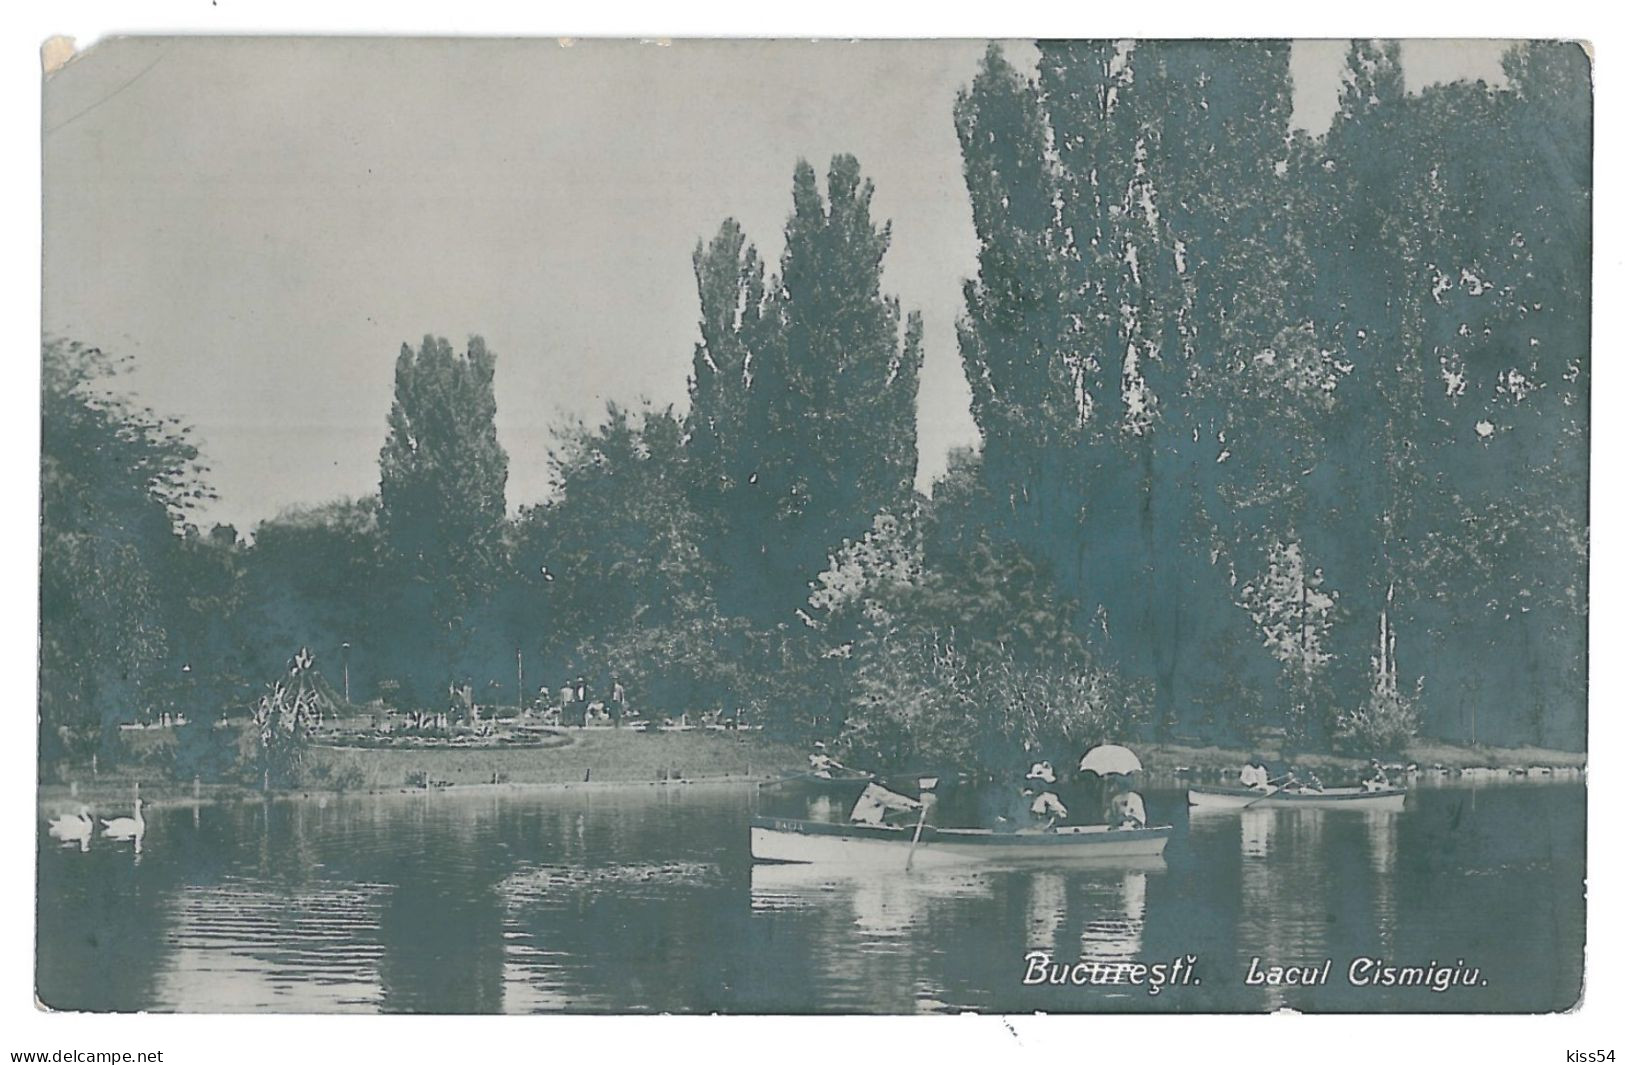 RO 47 - 12519 BUCURESTI, Romania, Park And Cismigiu Lake - Old Postcard, Real PHOTO - Used - 1910 - Romania